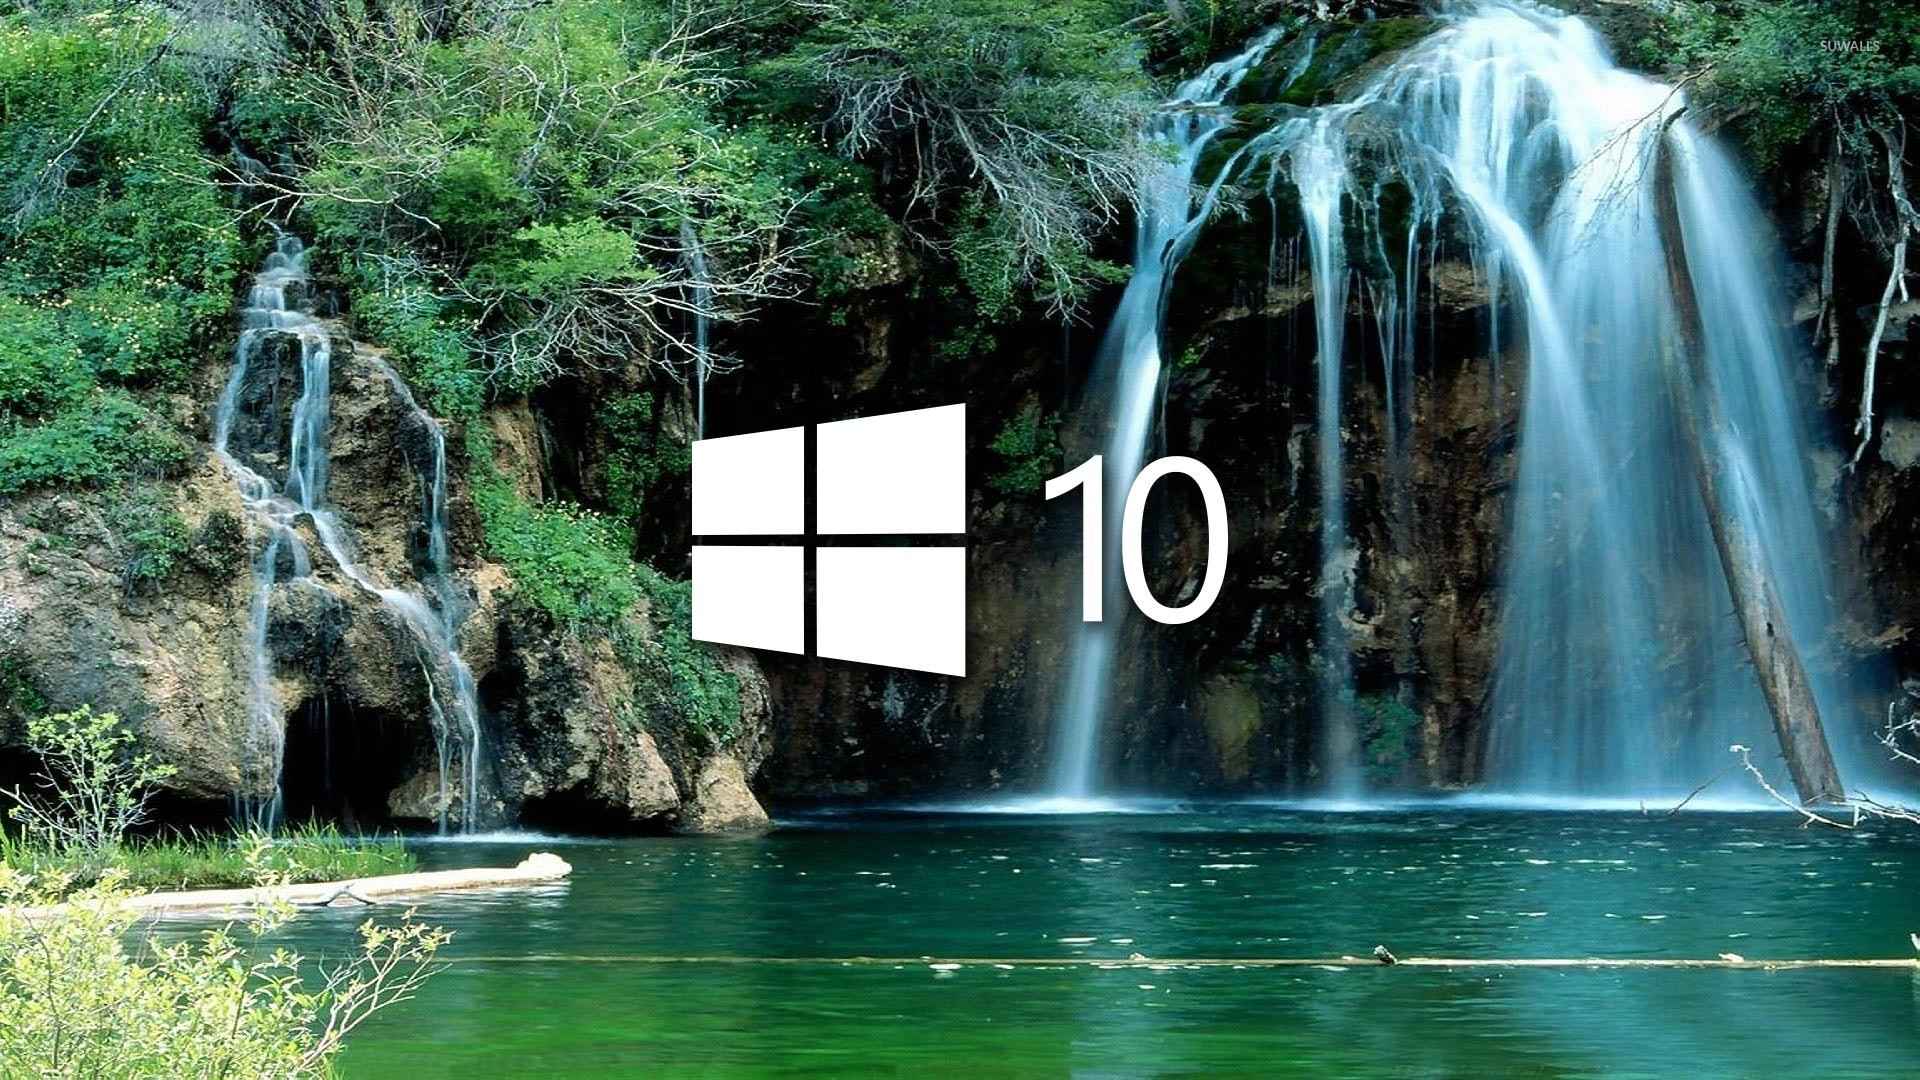 1920x1080, Windows 10 Over The Waterfall Simple Logo - Windows 10 Waterfall Wallpaper Location - HD Wallpaper 